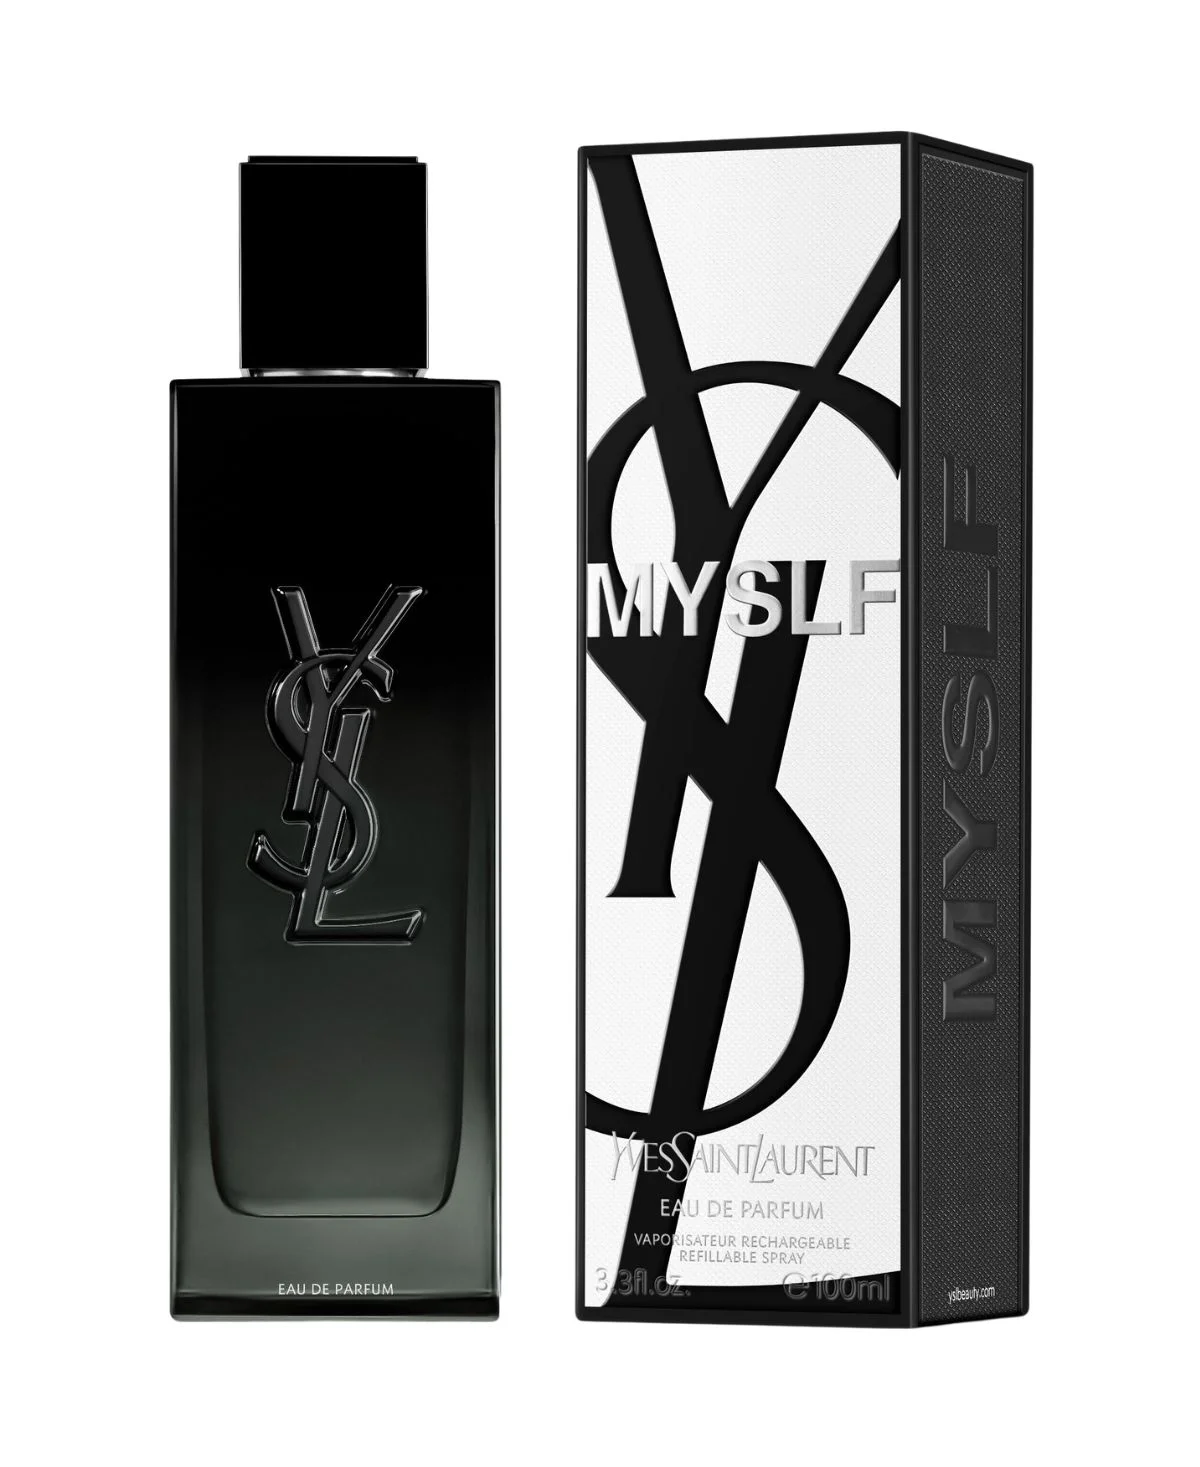 Yves Saint Laurent MYSLF for Men Eau de Parfum (EDP) Spray 3.4 oz (100 ml) 3614273852814